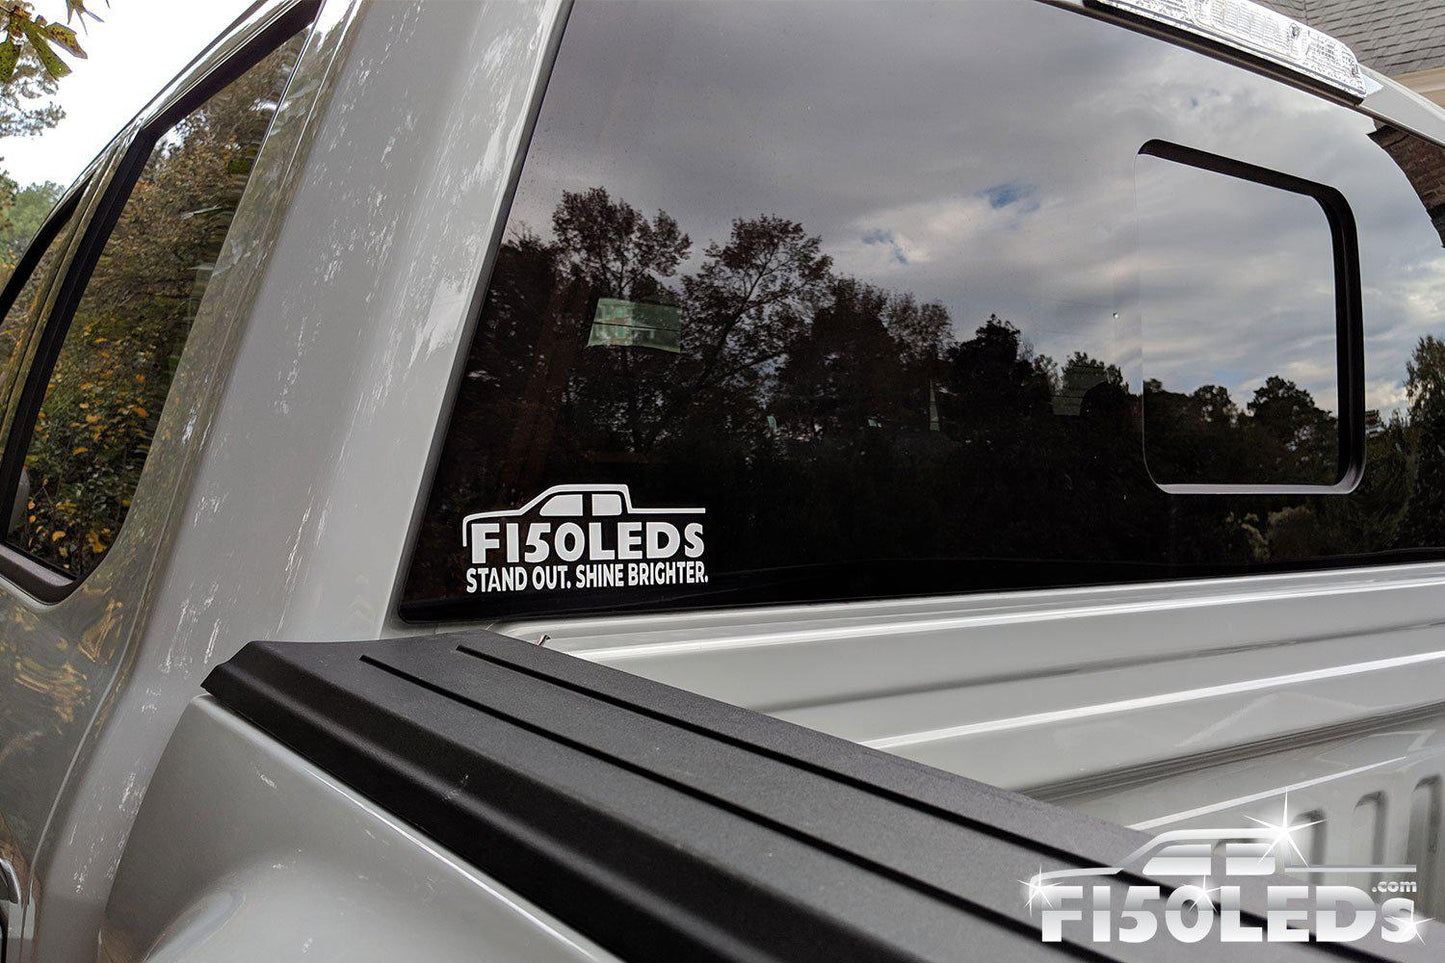 F150LEDs Vinyl Transfer Decal Sticker